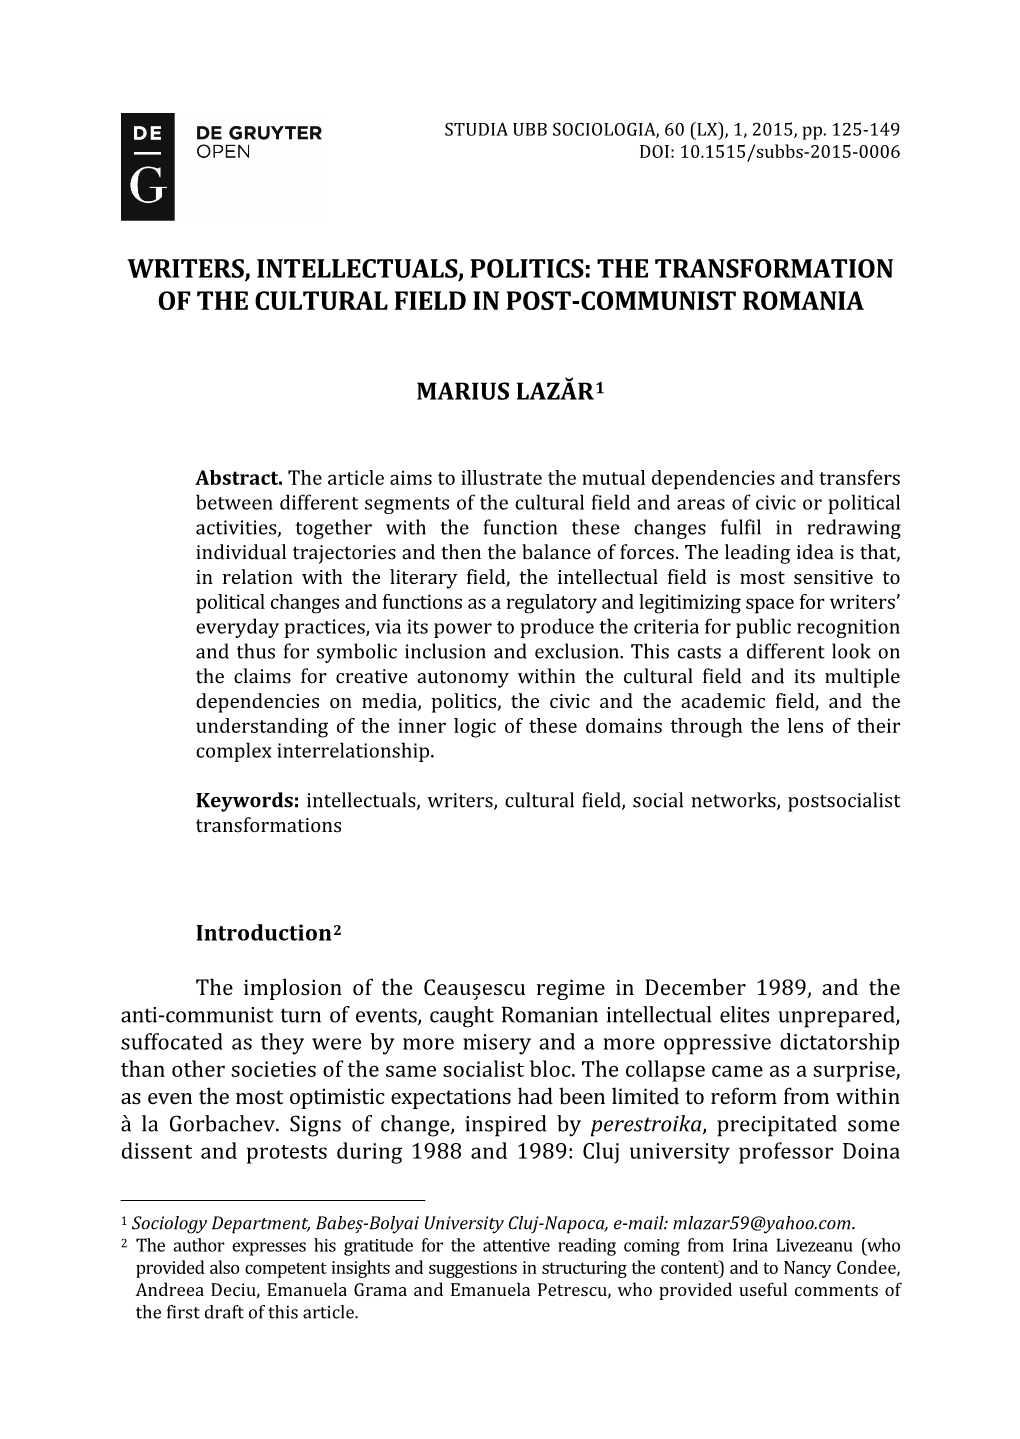 Writers, Intellectuals, Politics: the Transformation of the Cultural Field in Post-Communist Romania